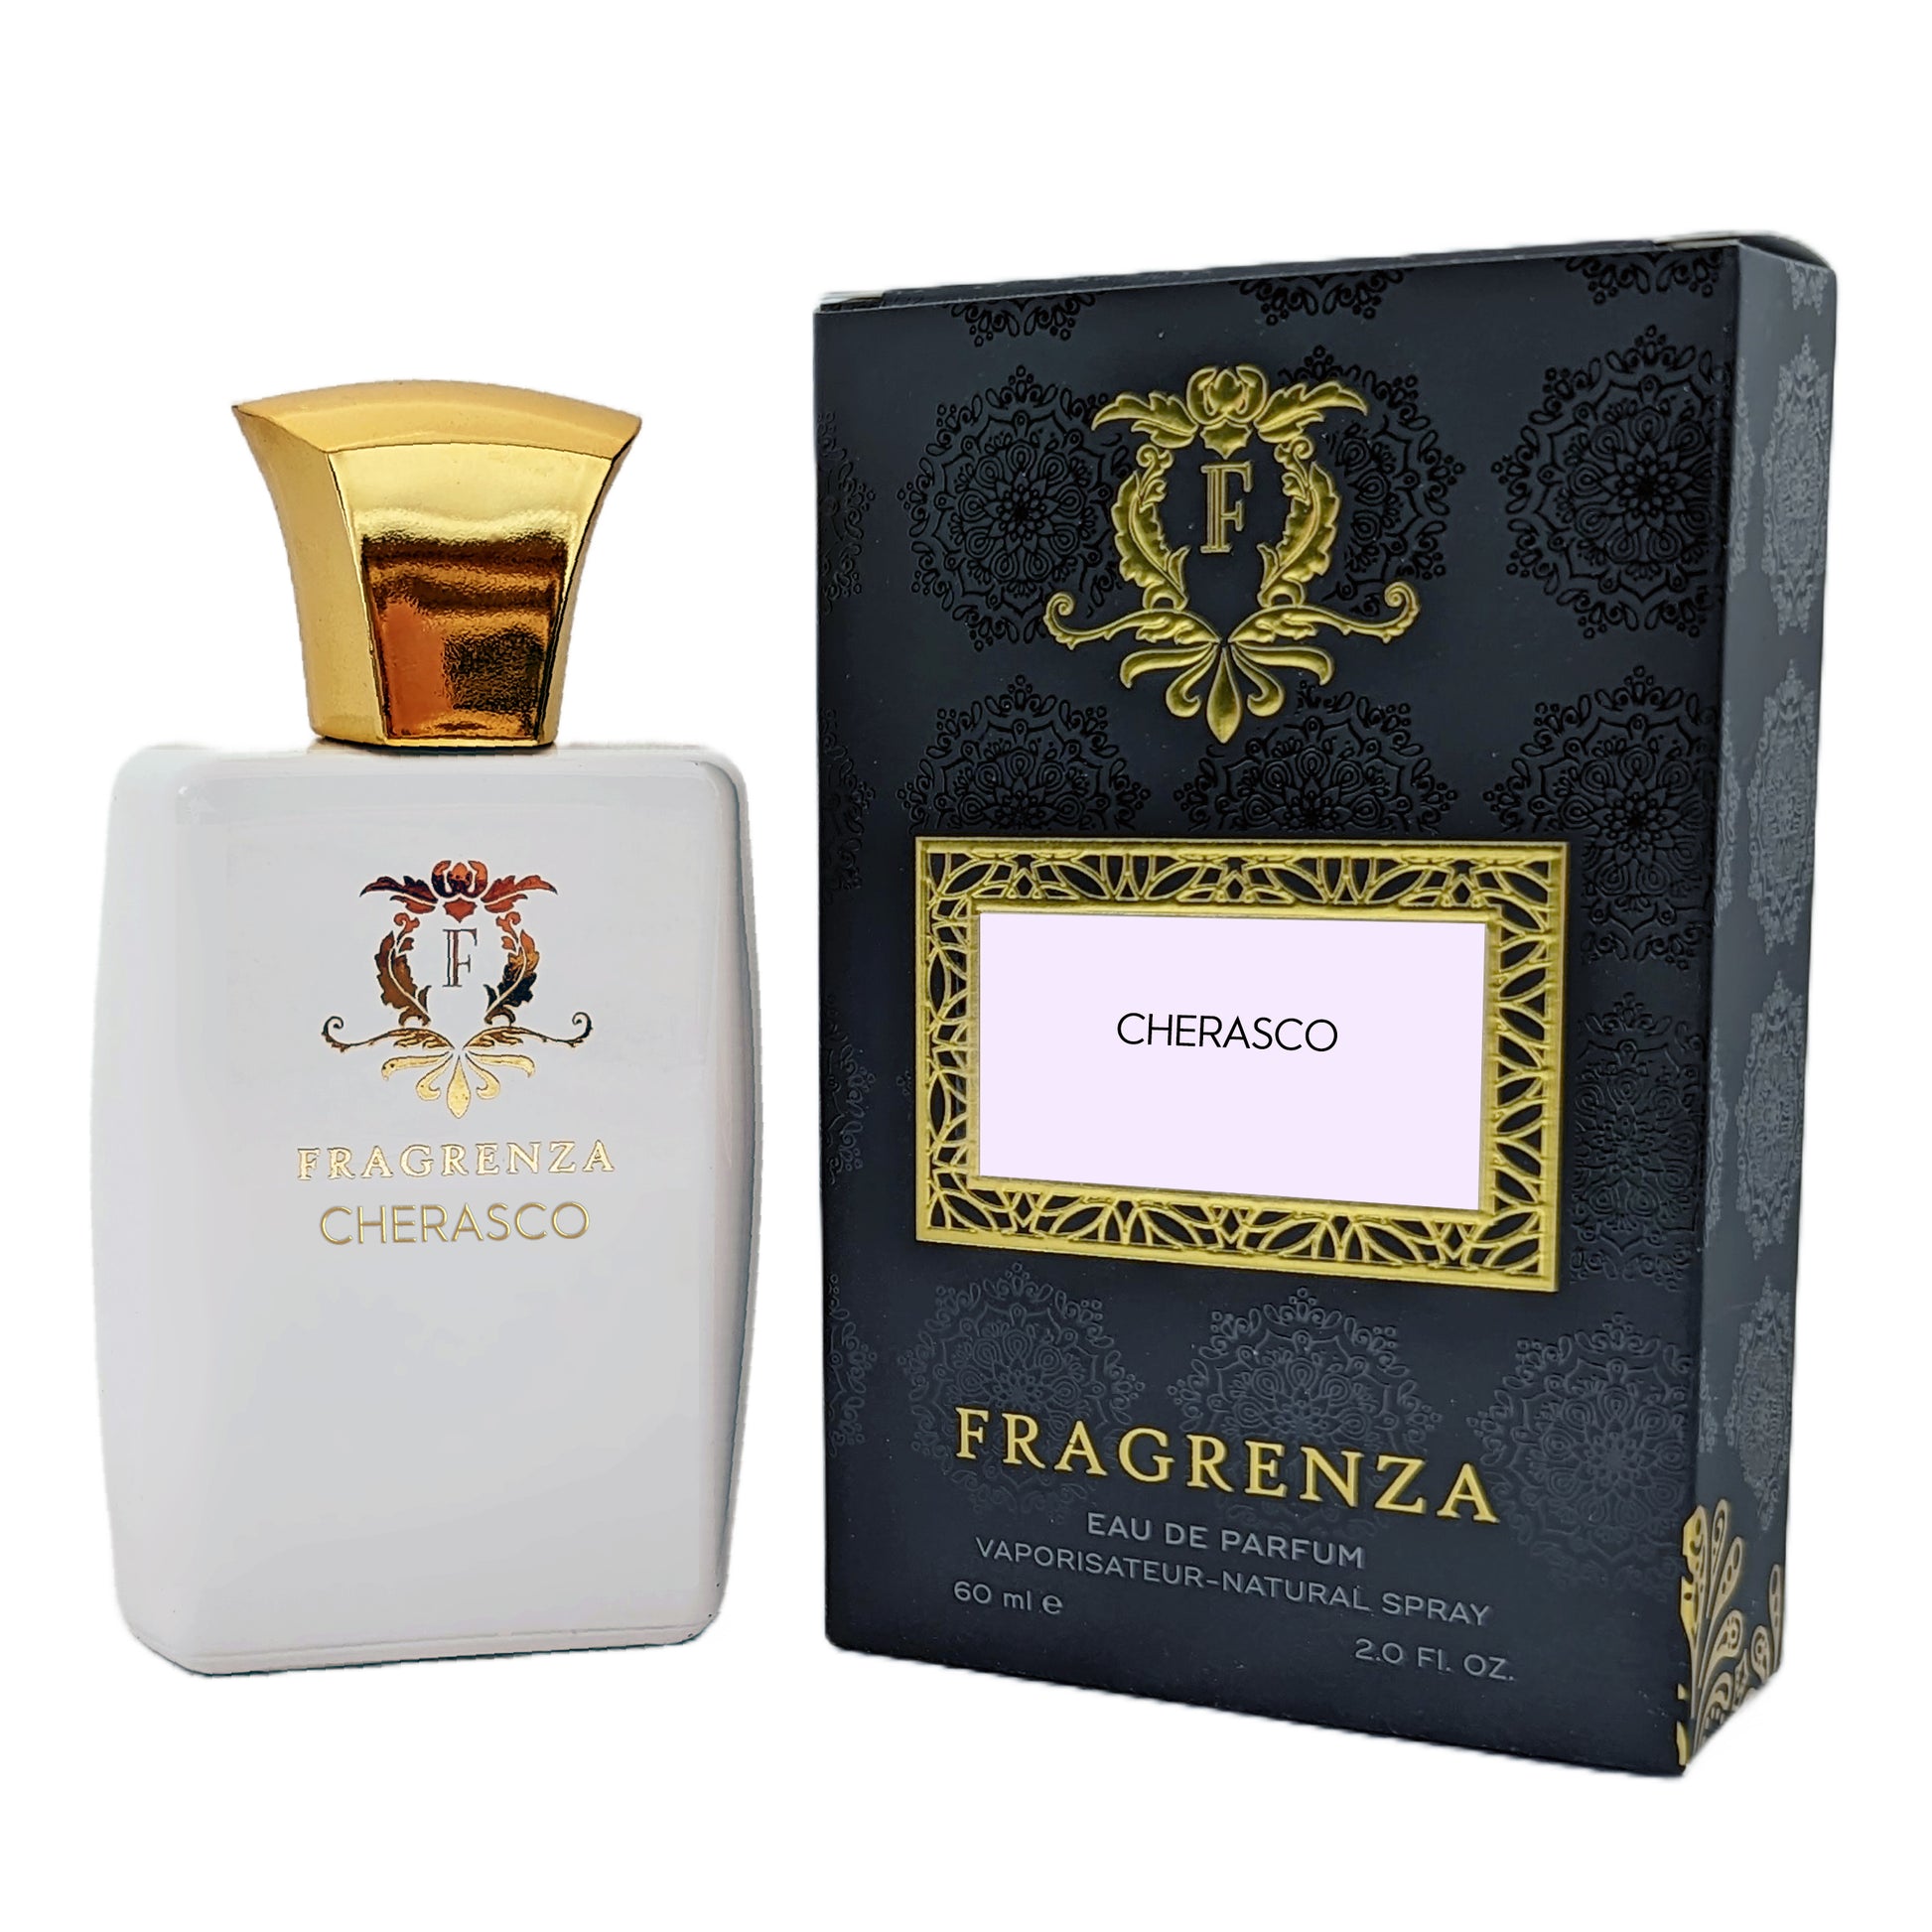 Chanel Chance Inspired Luxe Perfume - Cherasco – Fragrenza